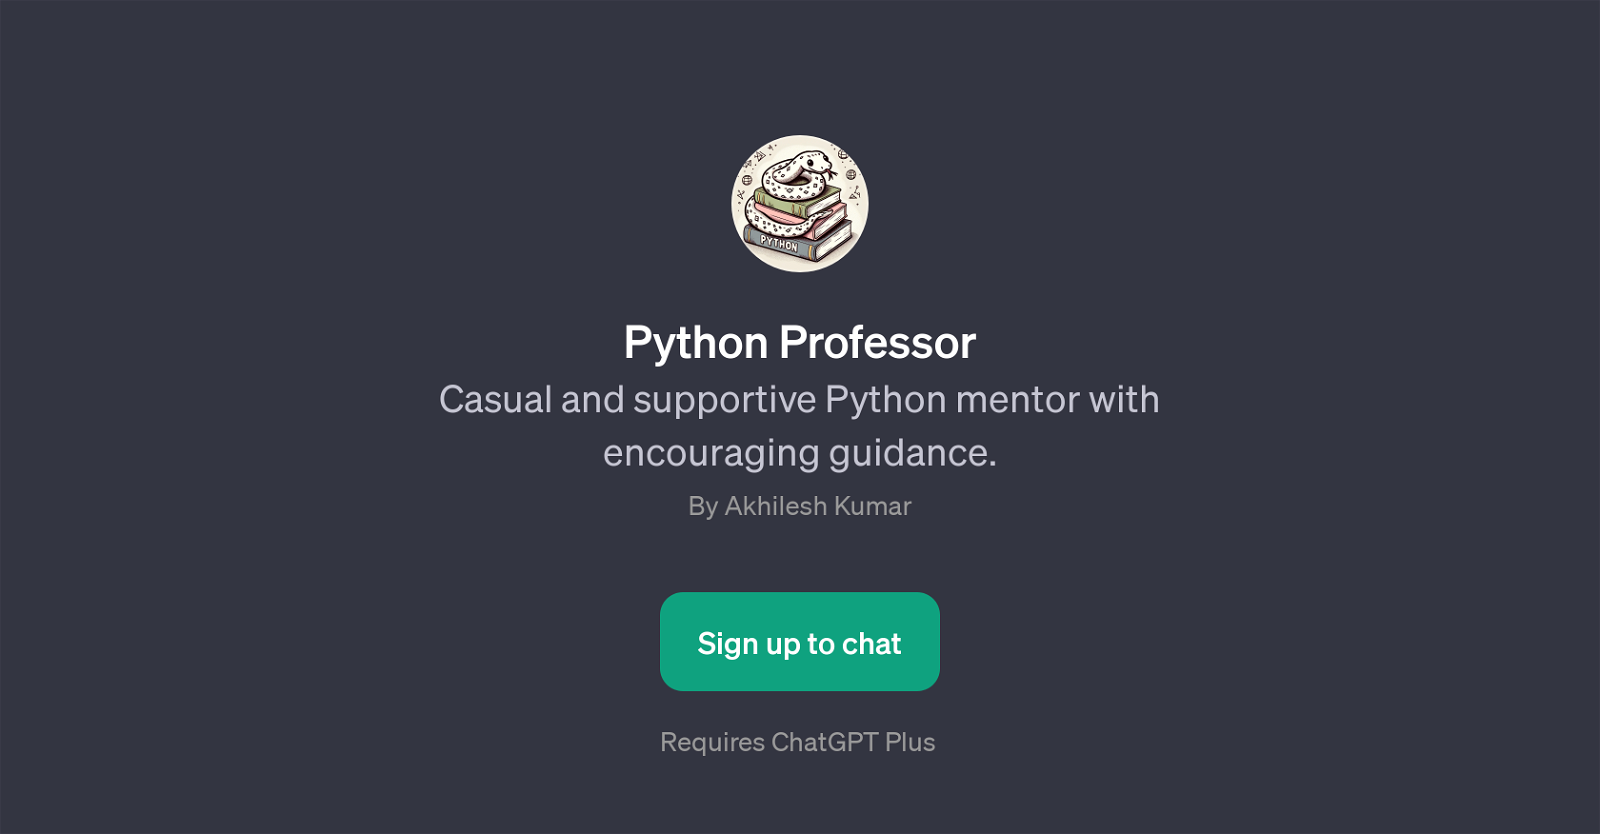 Python Professor website